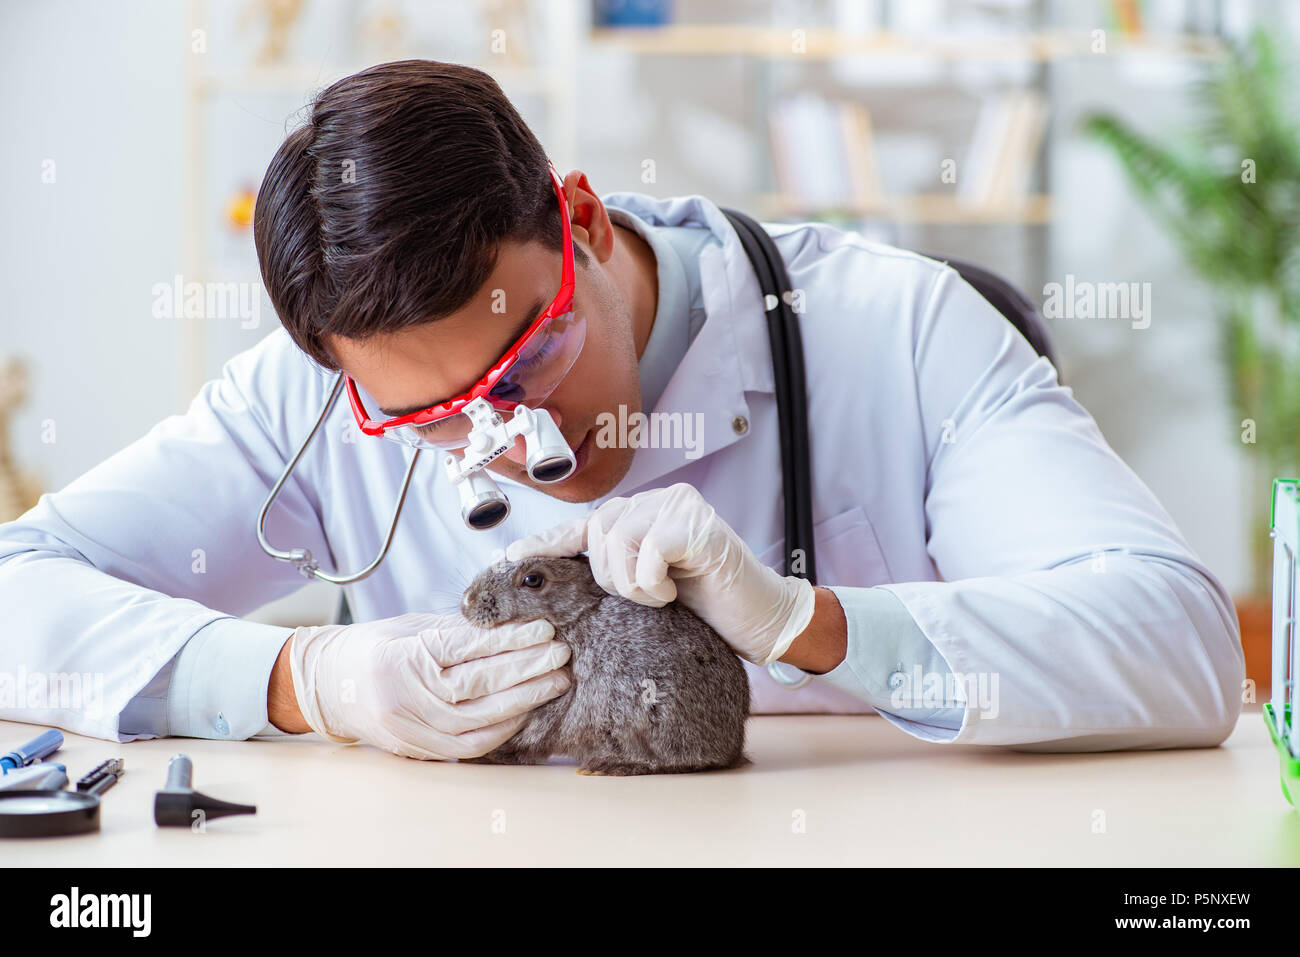 Scientist doing testing on animals rabbit Stock Photo - Alamy